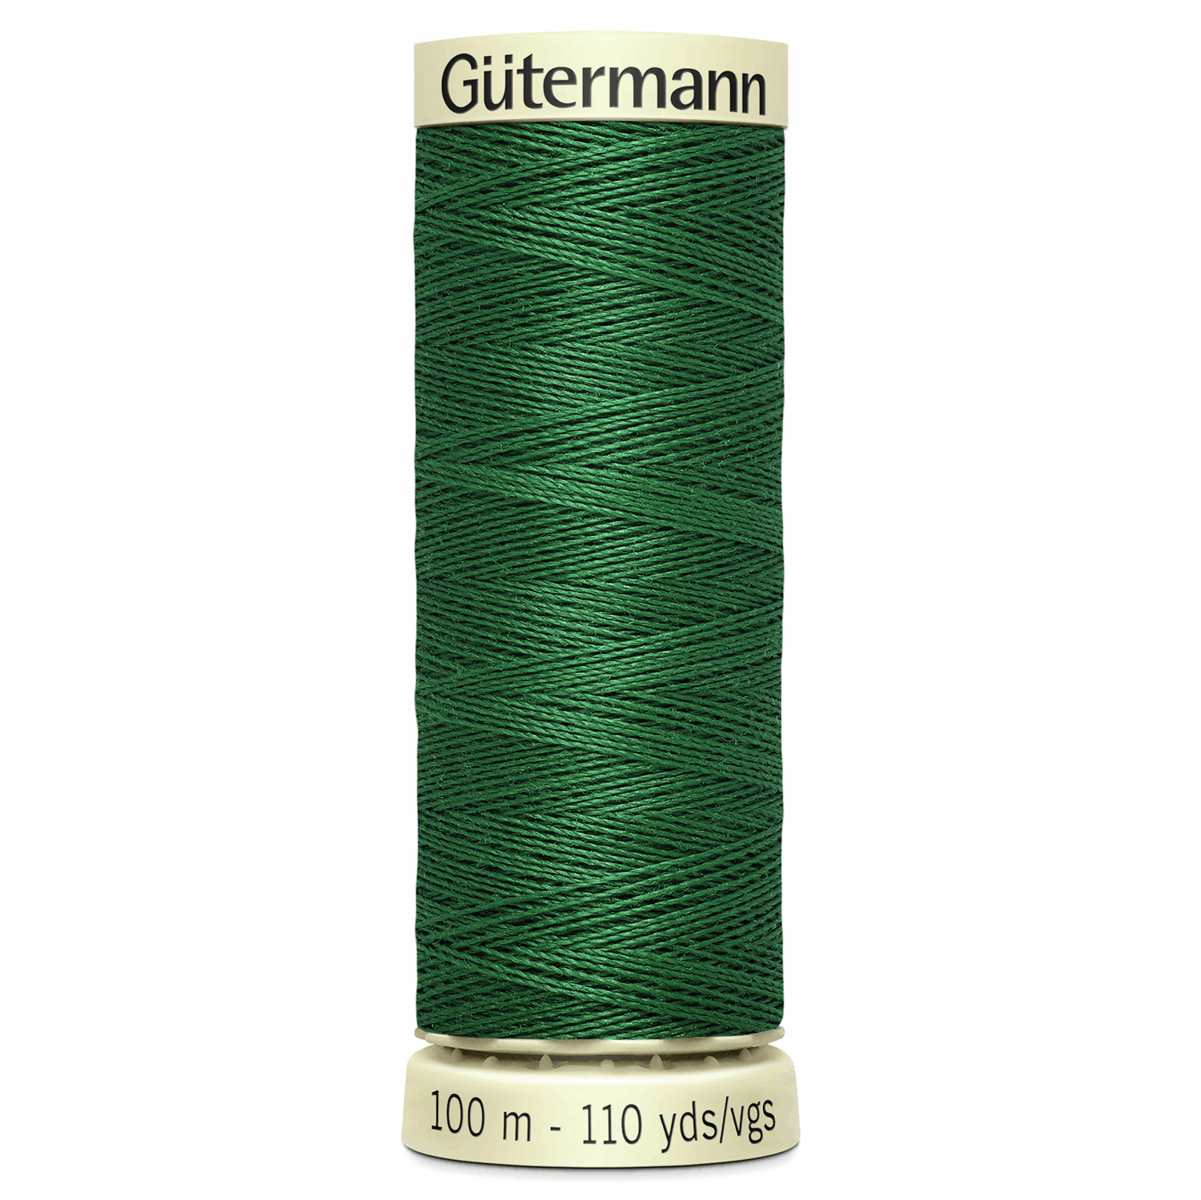 Gutermann Sew-All Thread 100m - Clover Leaf (#237)